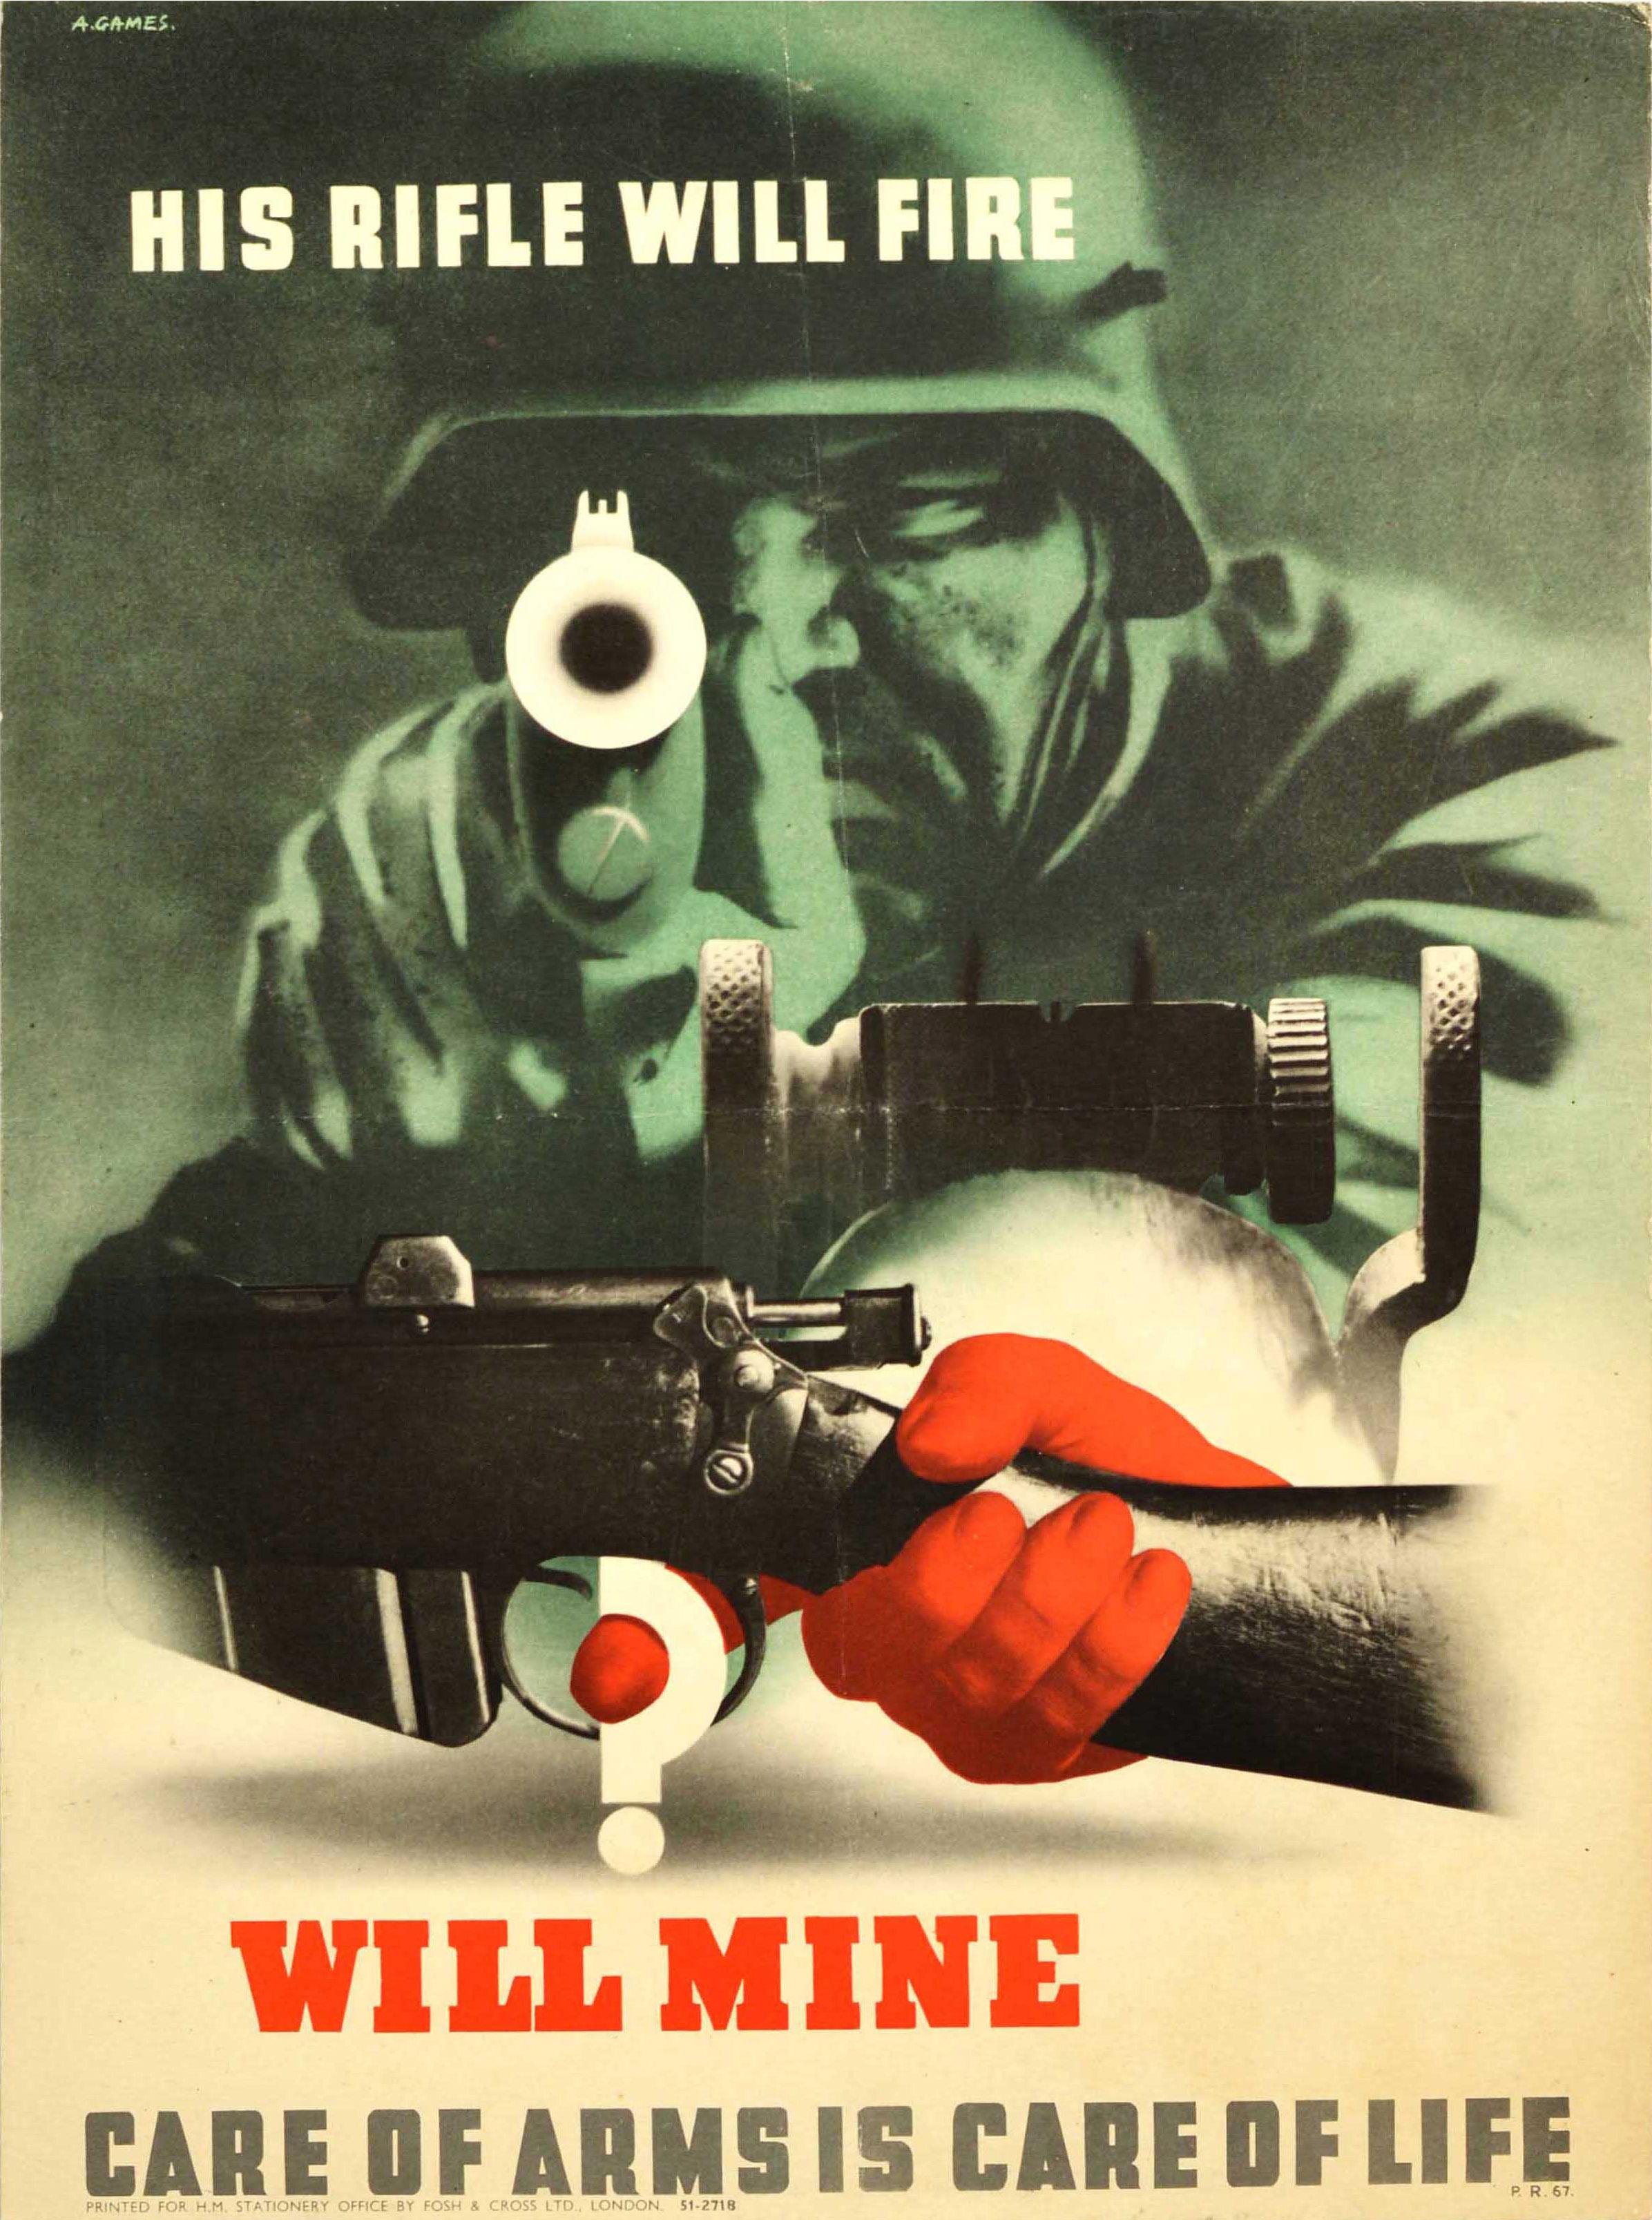 abram games war posters